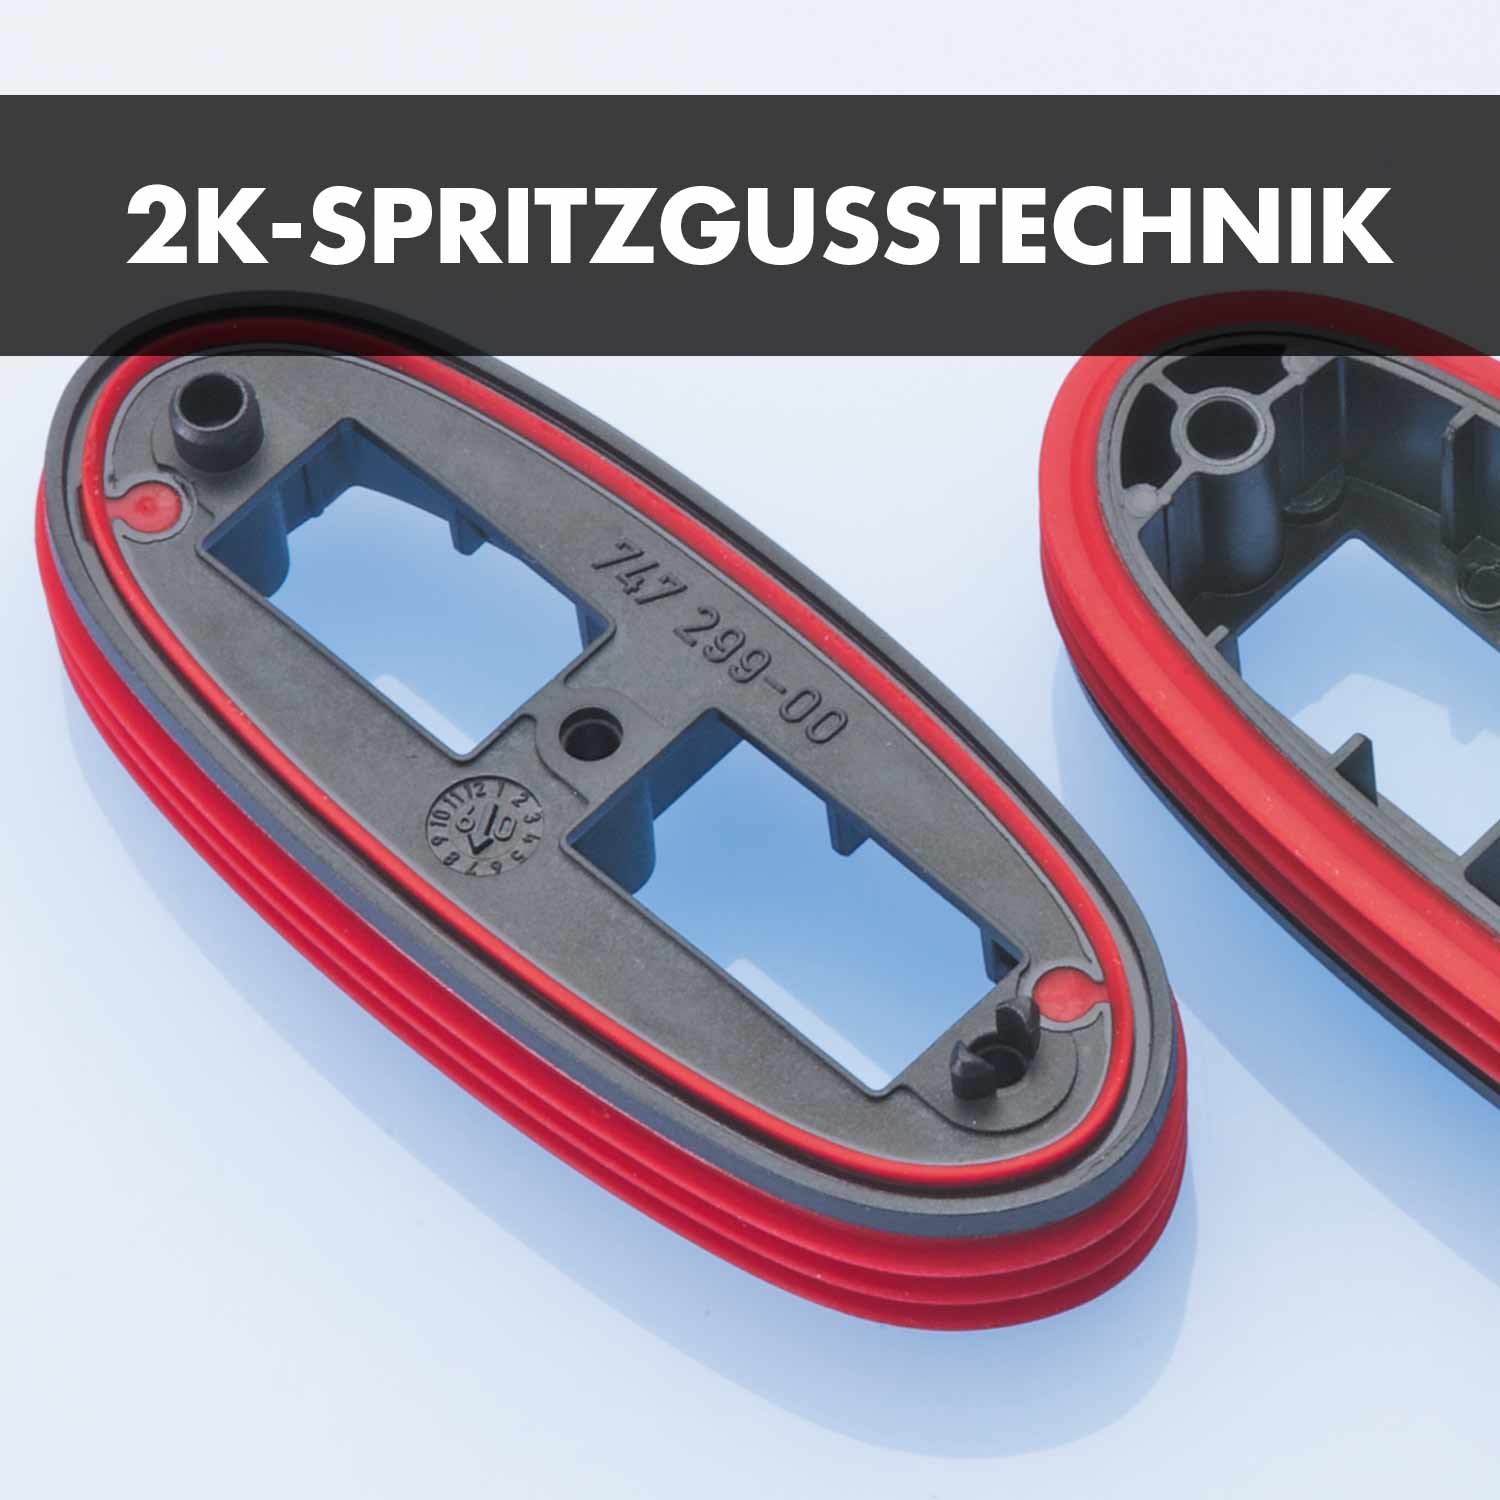 2K-Spritzgusstechnik